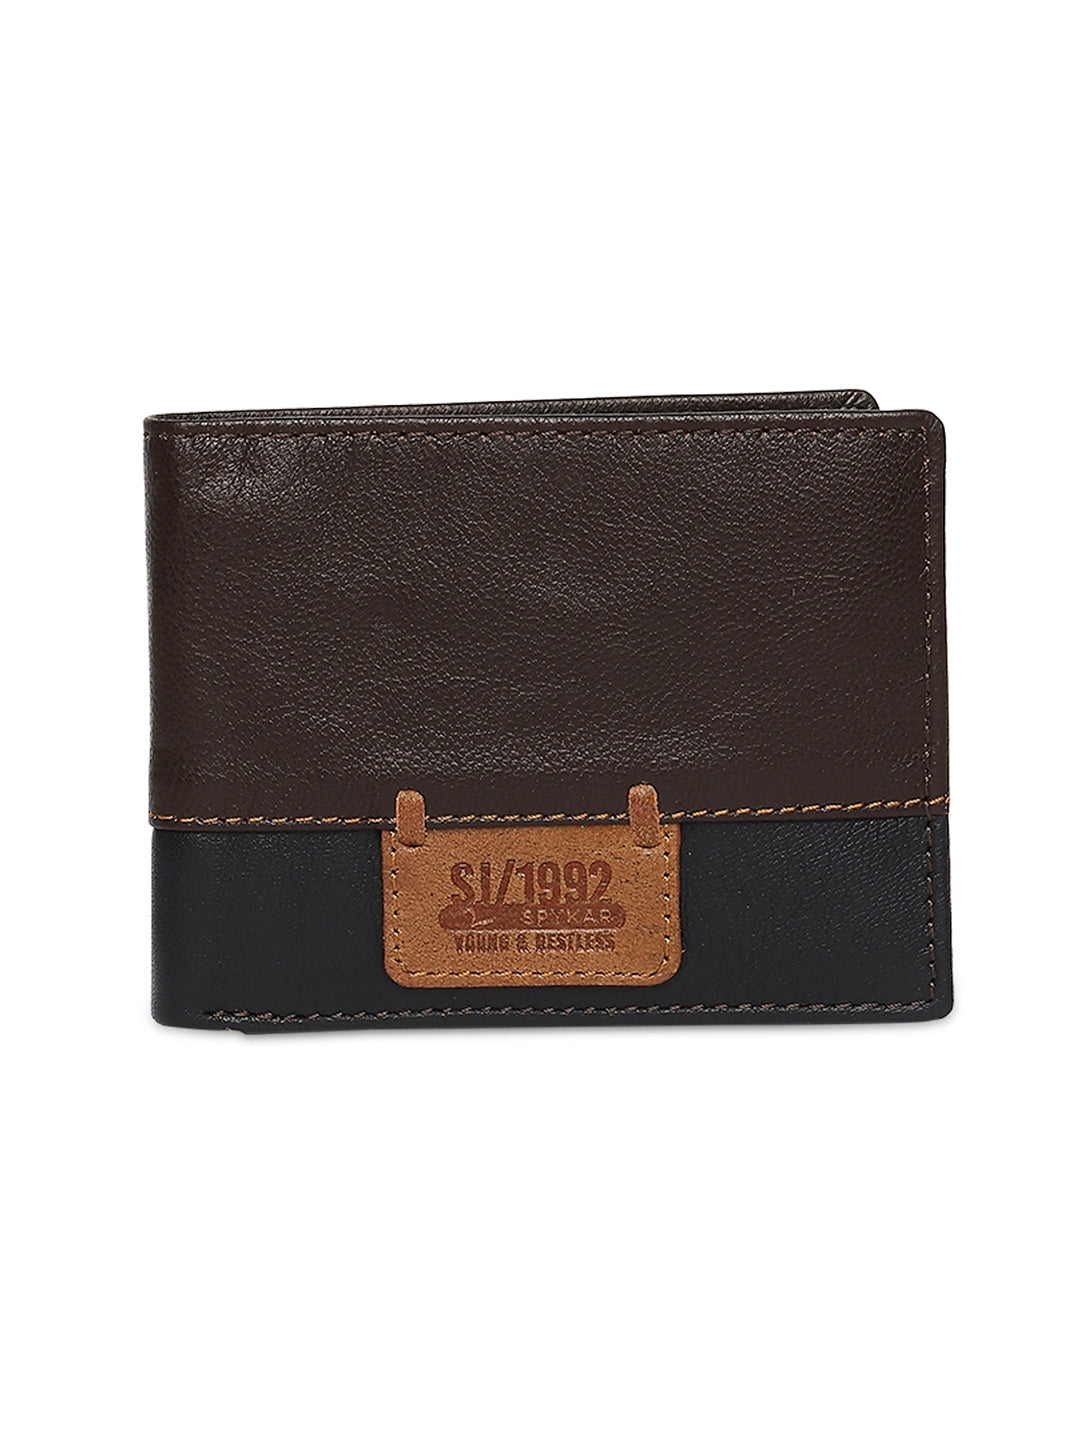 Spykar Men Brown Leather Bi-Fold Wallet